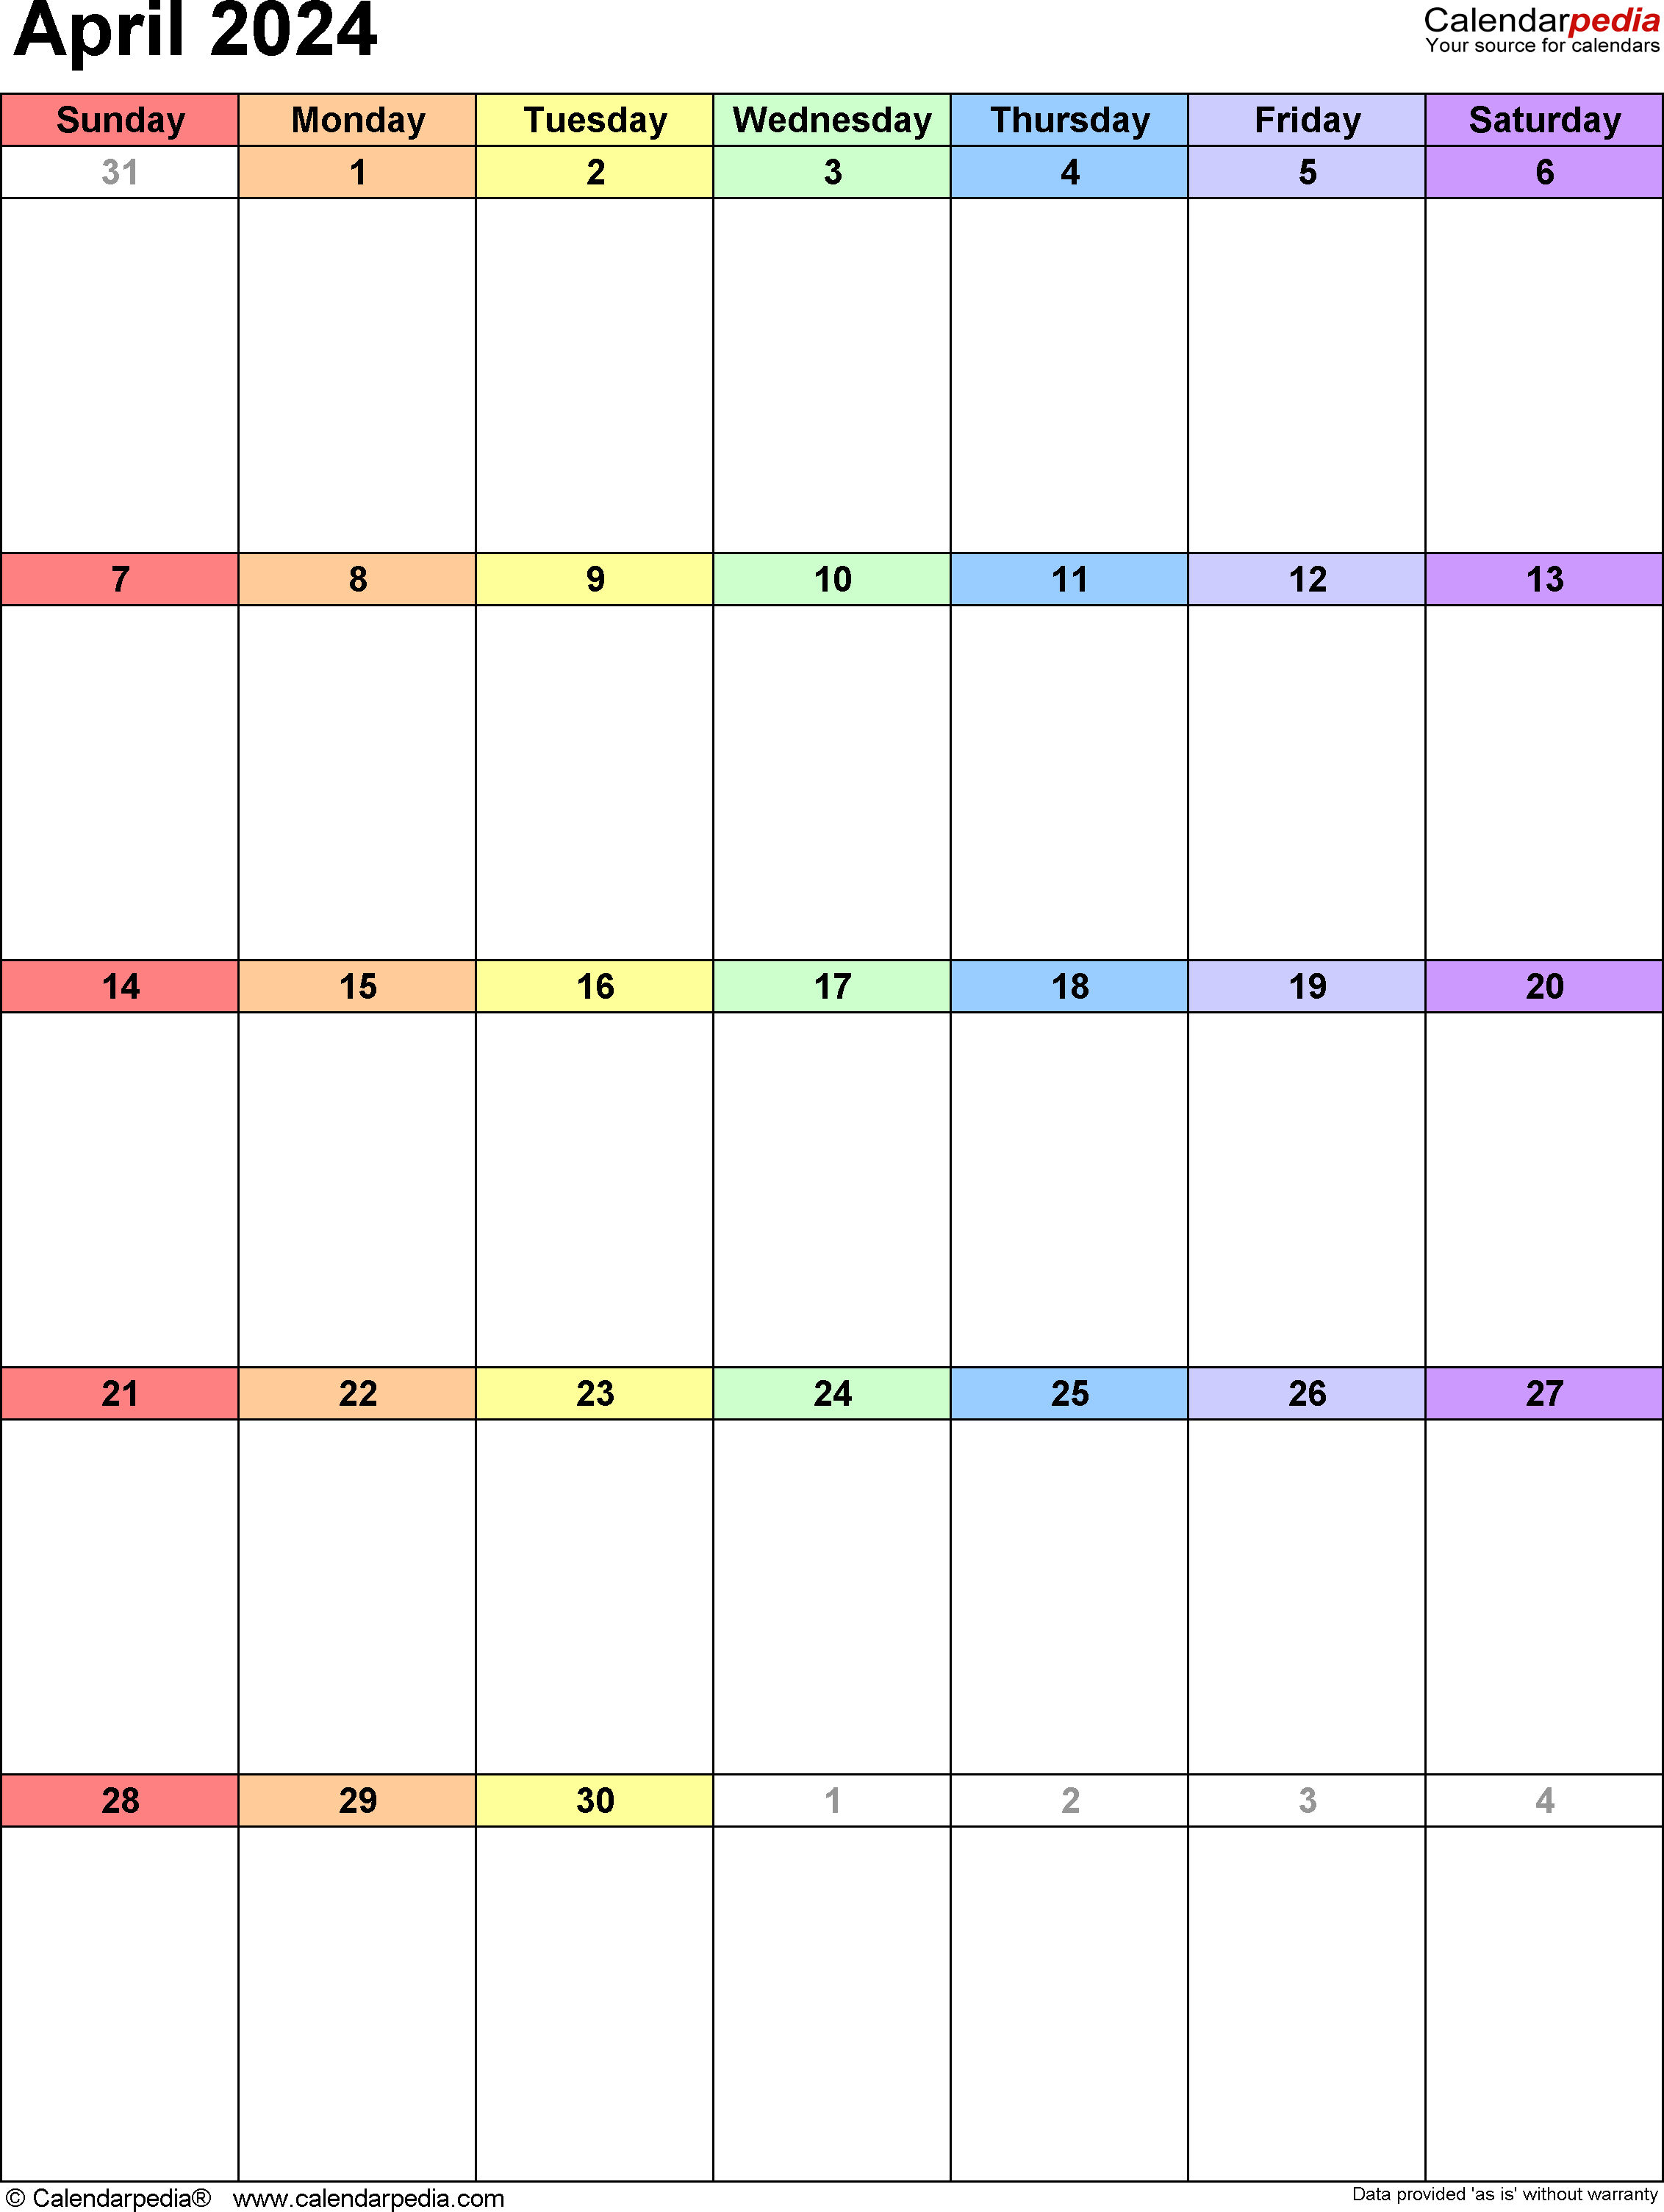 April 2024 Calendar | Templates For Word, Excel And Pdf pertaining to April 2024 Calendar Excel